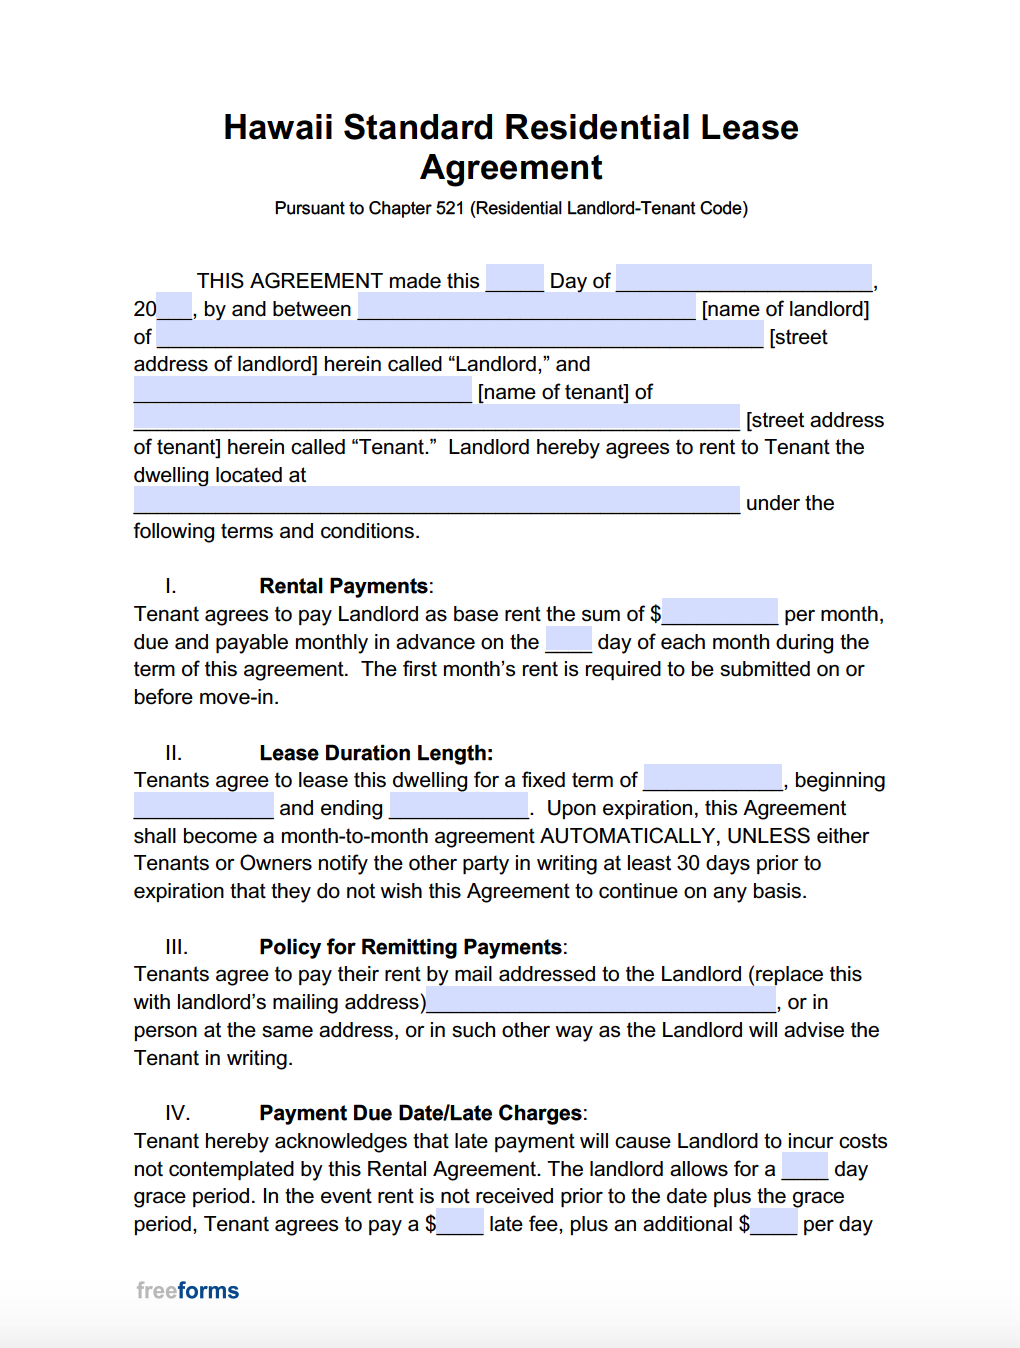 free-printable-hawaii-lease-agreement-form-printable-form-templates